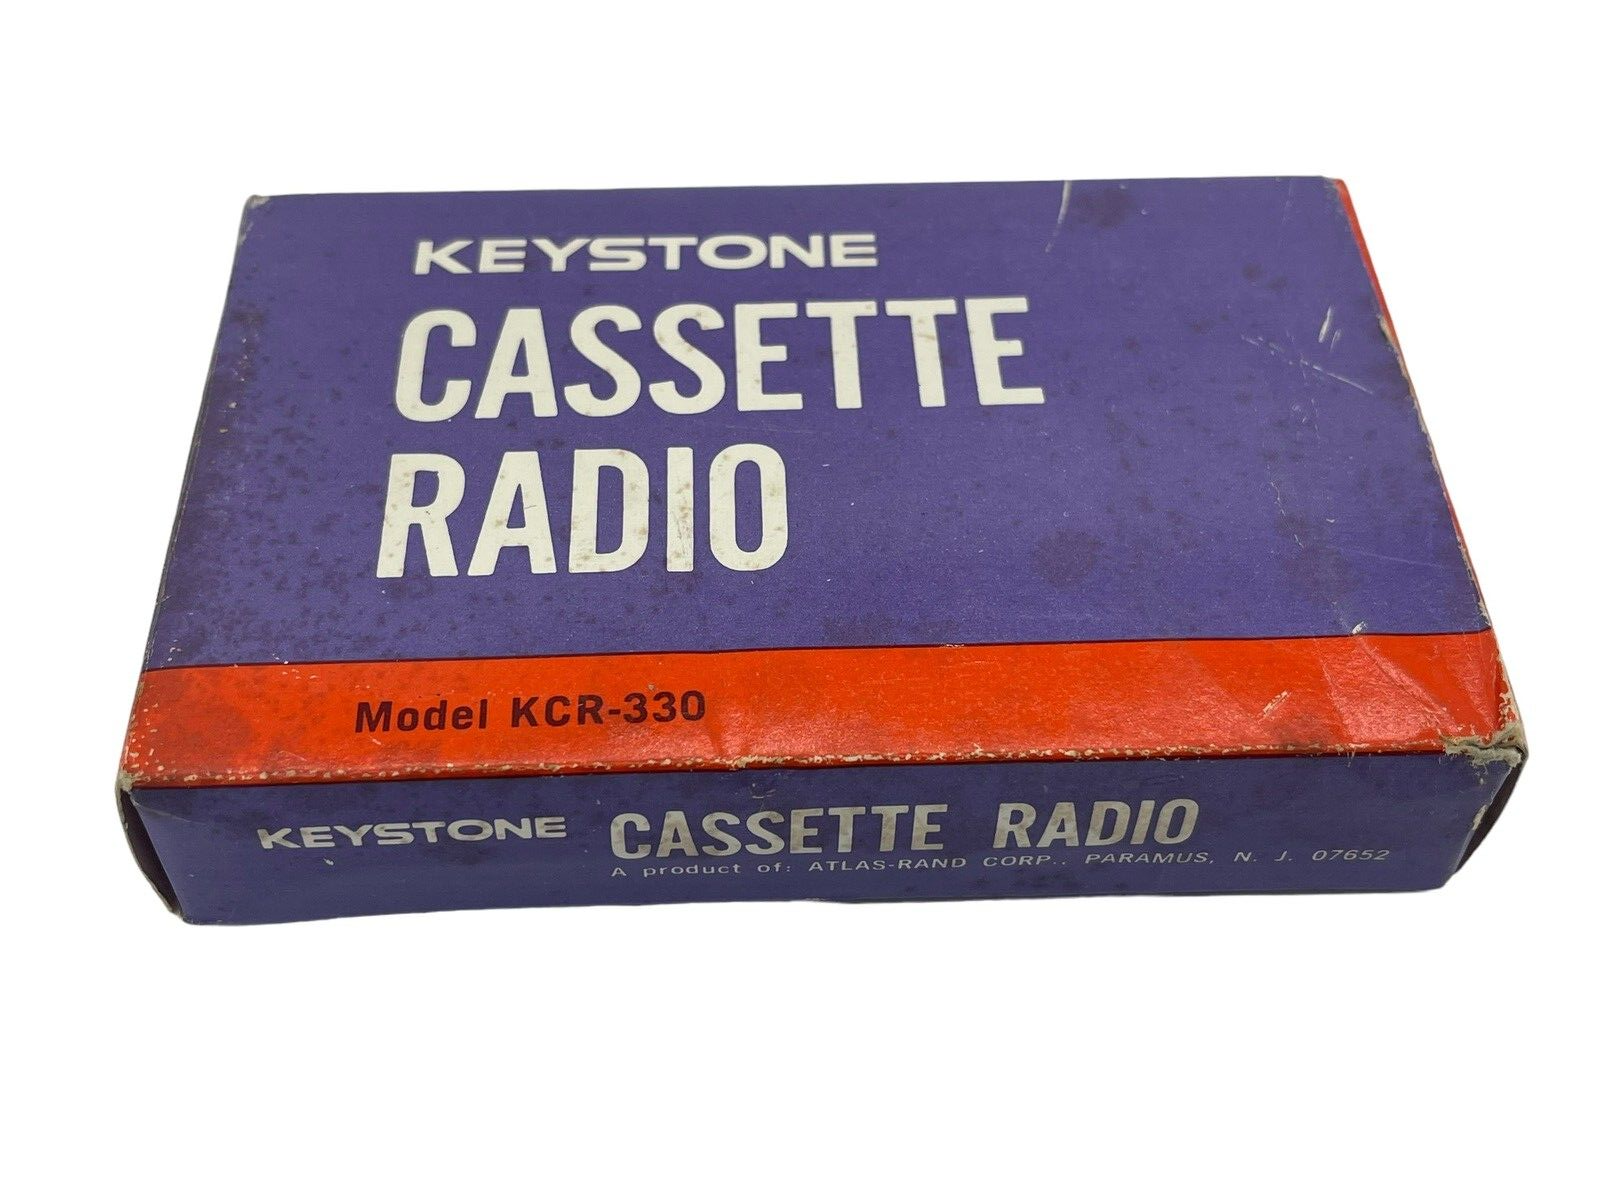 Primary image for Vintage Keystone AM Cassette Radio KCR-330 Original Box Japan